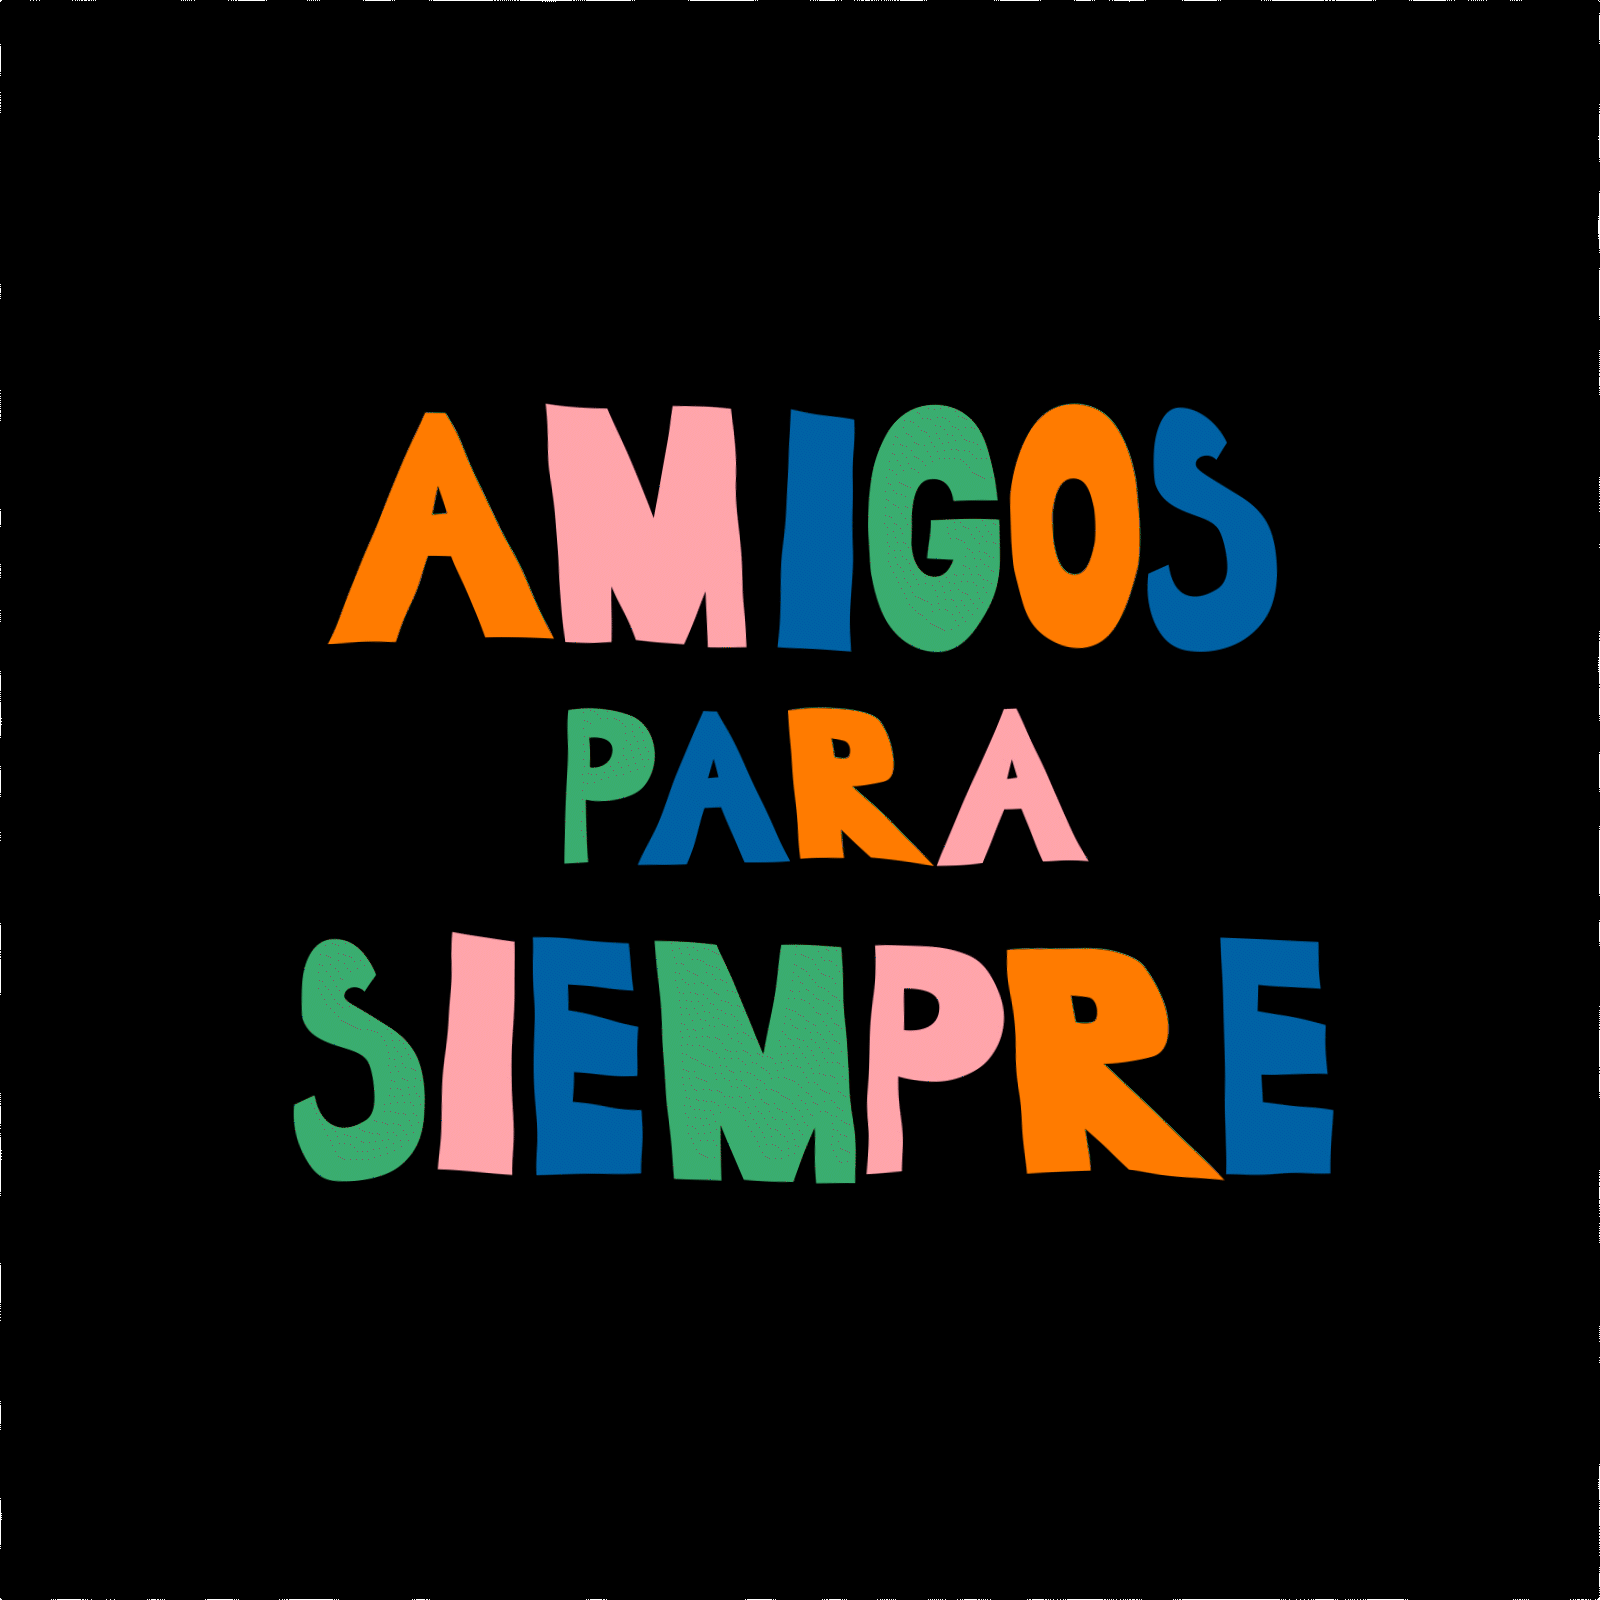 Amigos para siempre amigos animation animação blue colorful green handmade handmade letters kinetic typography message motion graphics orange pink positive phrase spanish typography